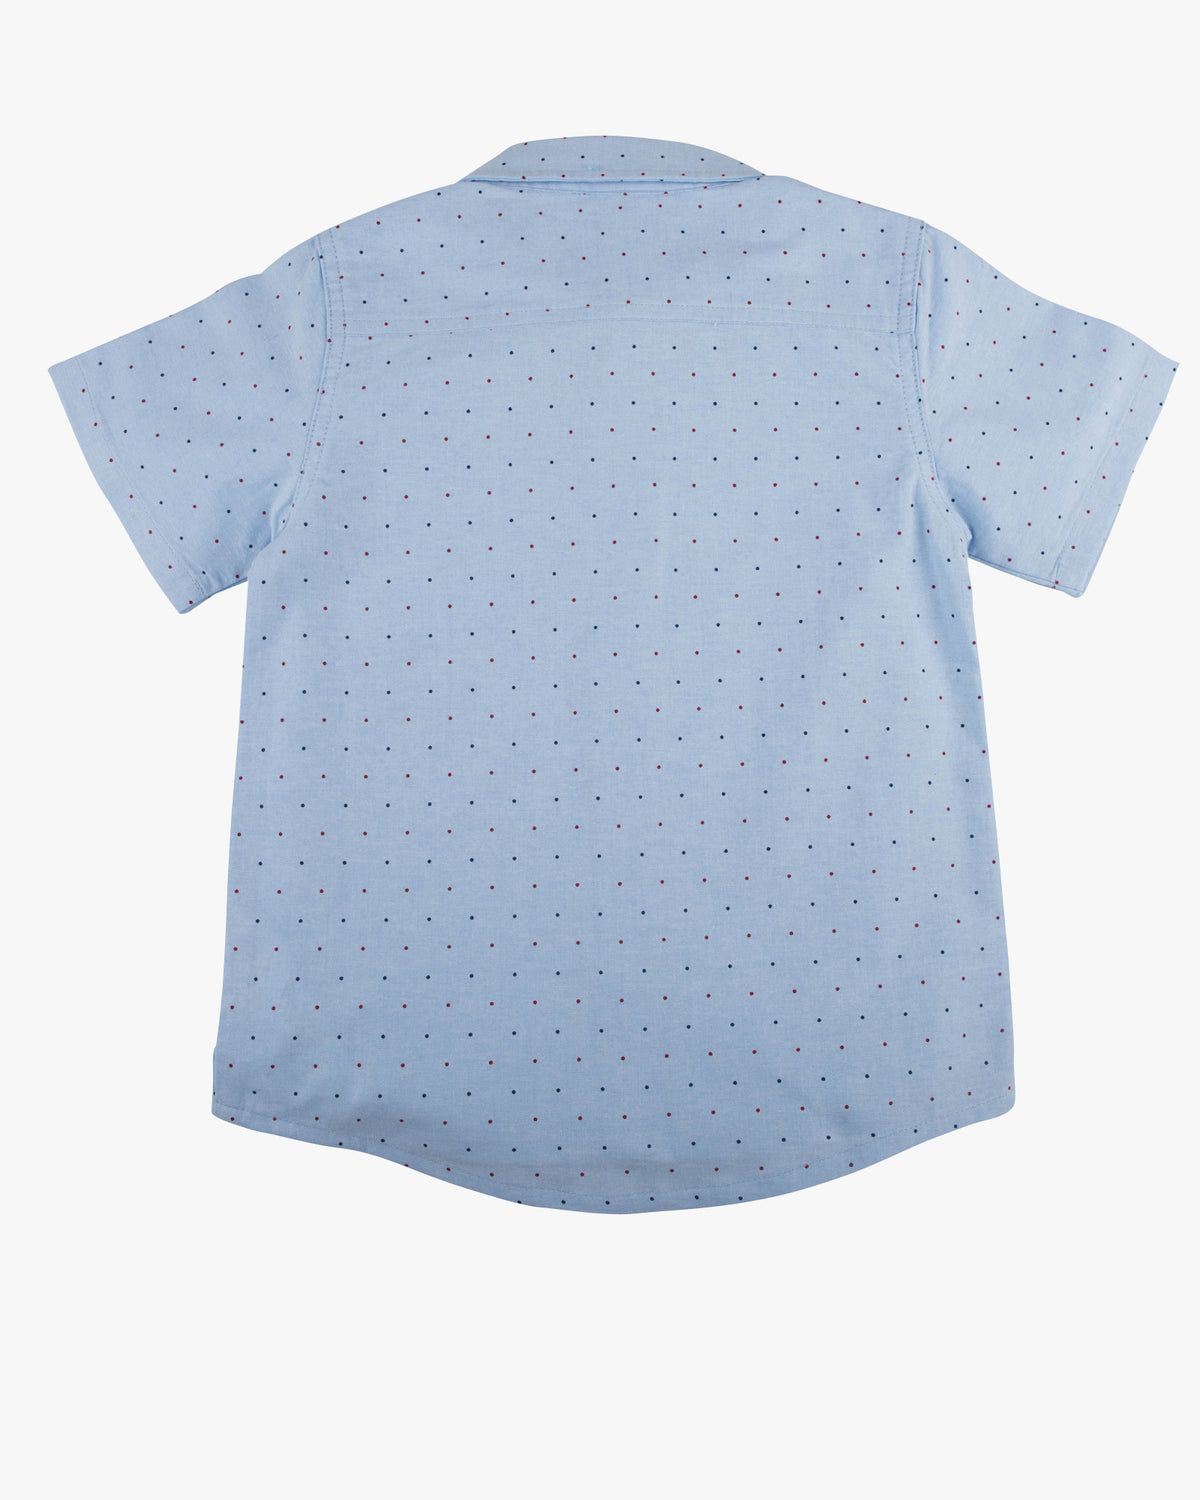 Pin Dot Print Shirt blue back